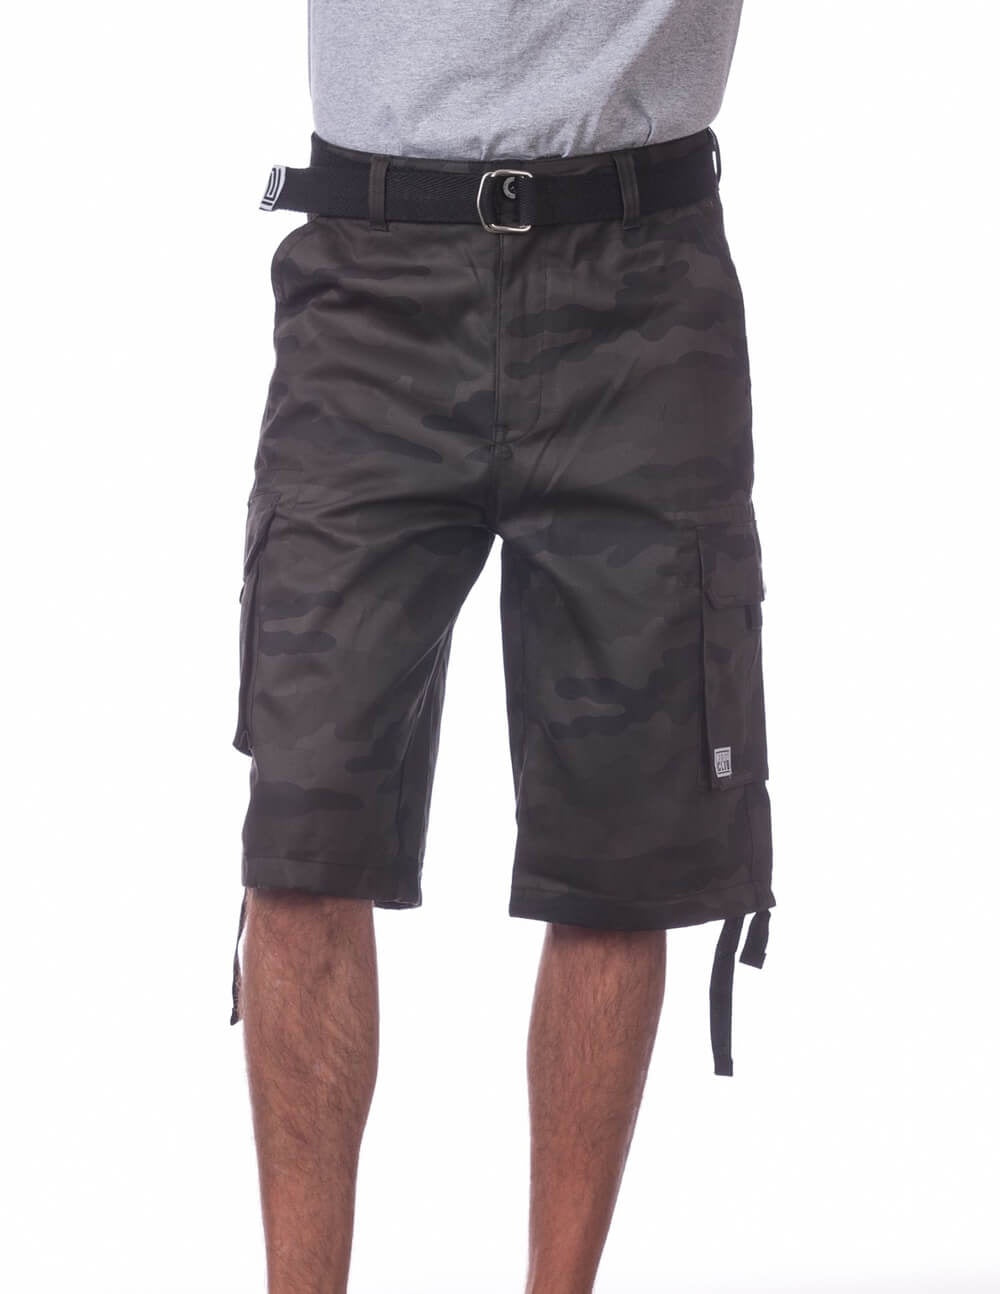 Pro Club Twill Cargo Shorts with Belt - BLACK CAMO